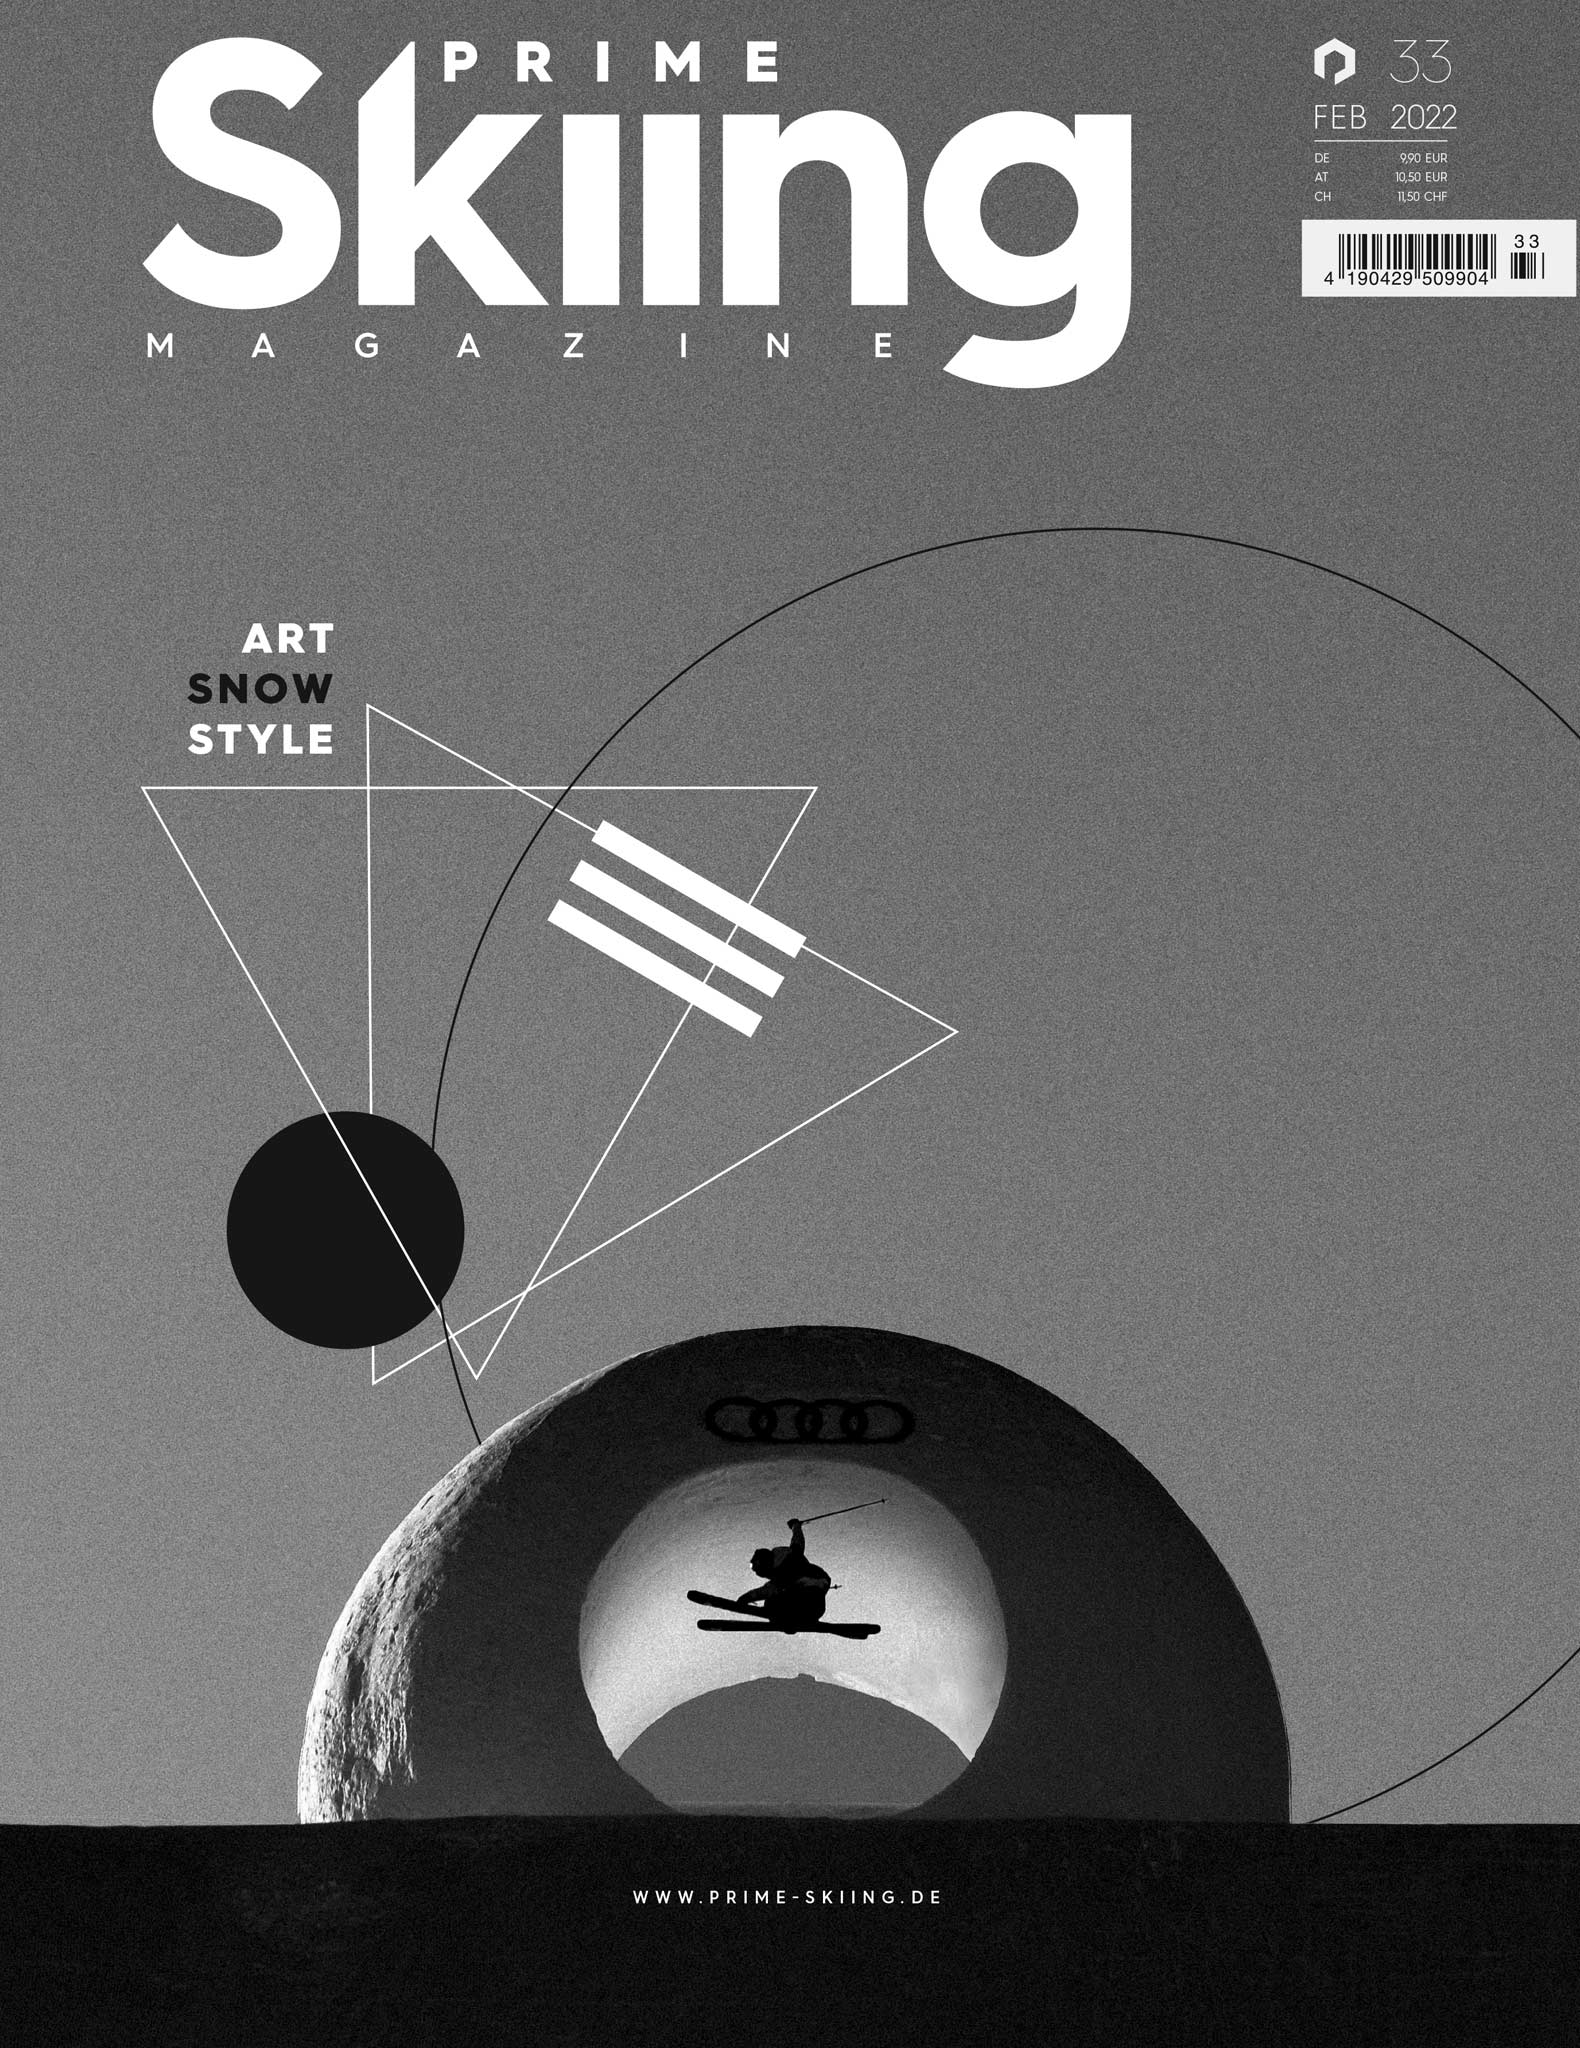 PRIME SKIING MAGAZINE #33 (Februar 2022) - Cover